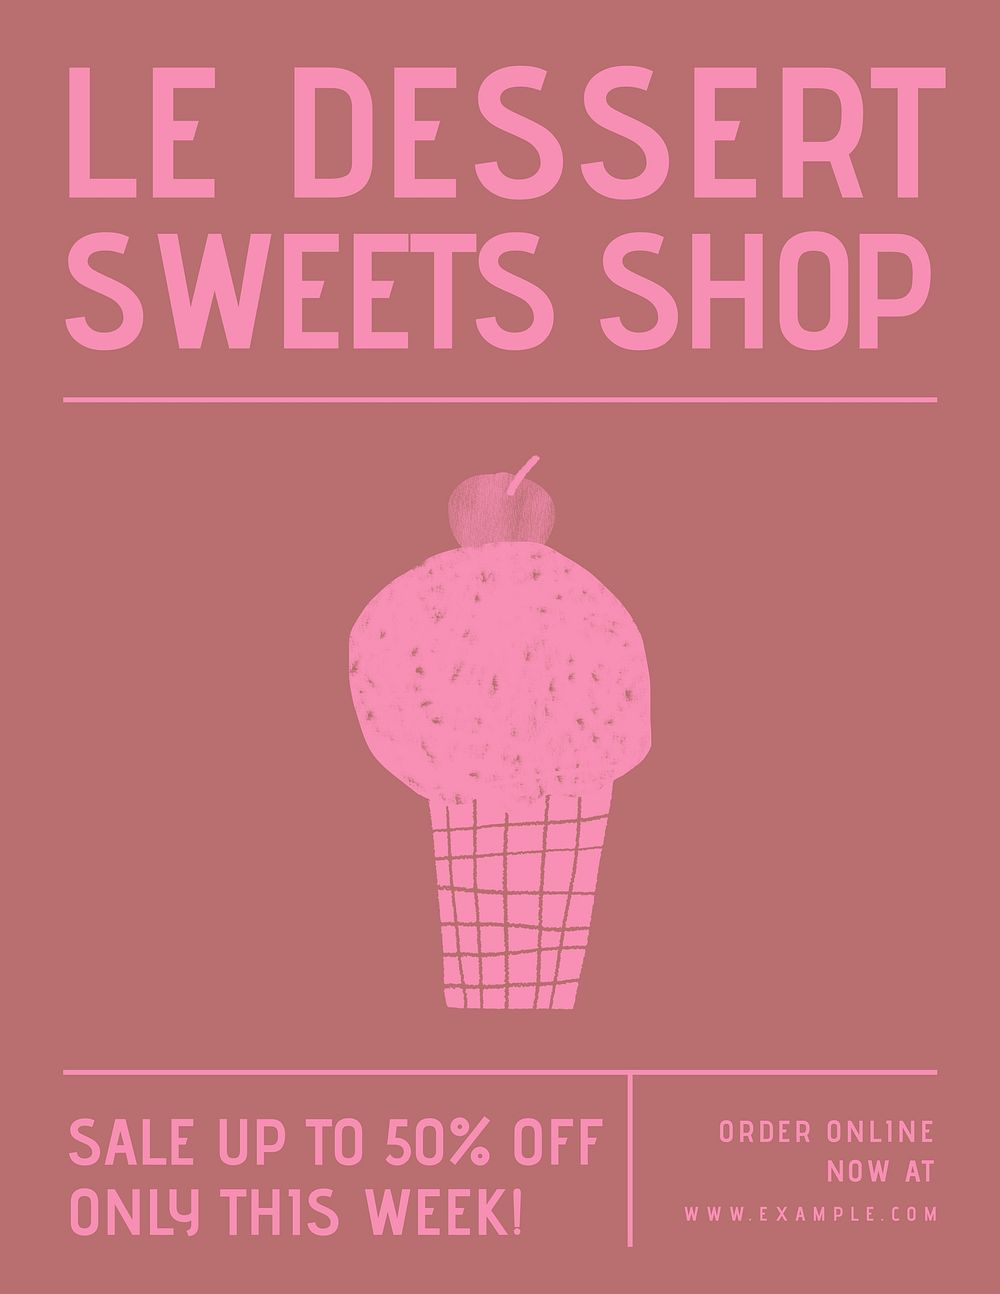 Sweet shop flyer template